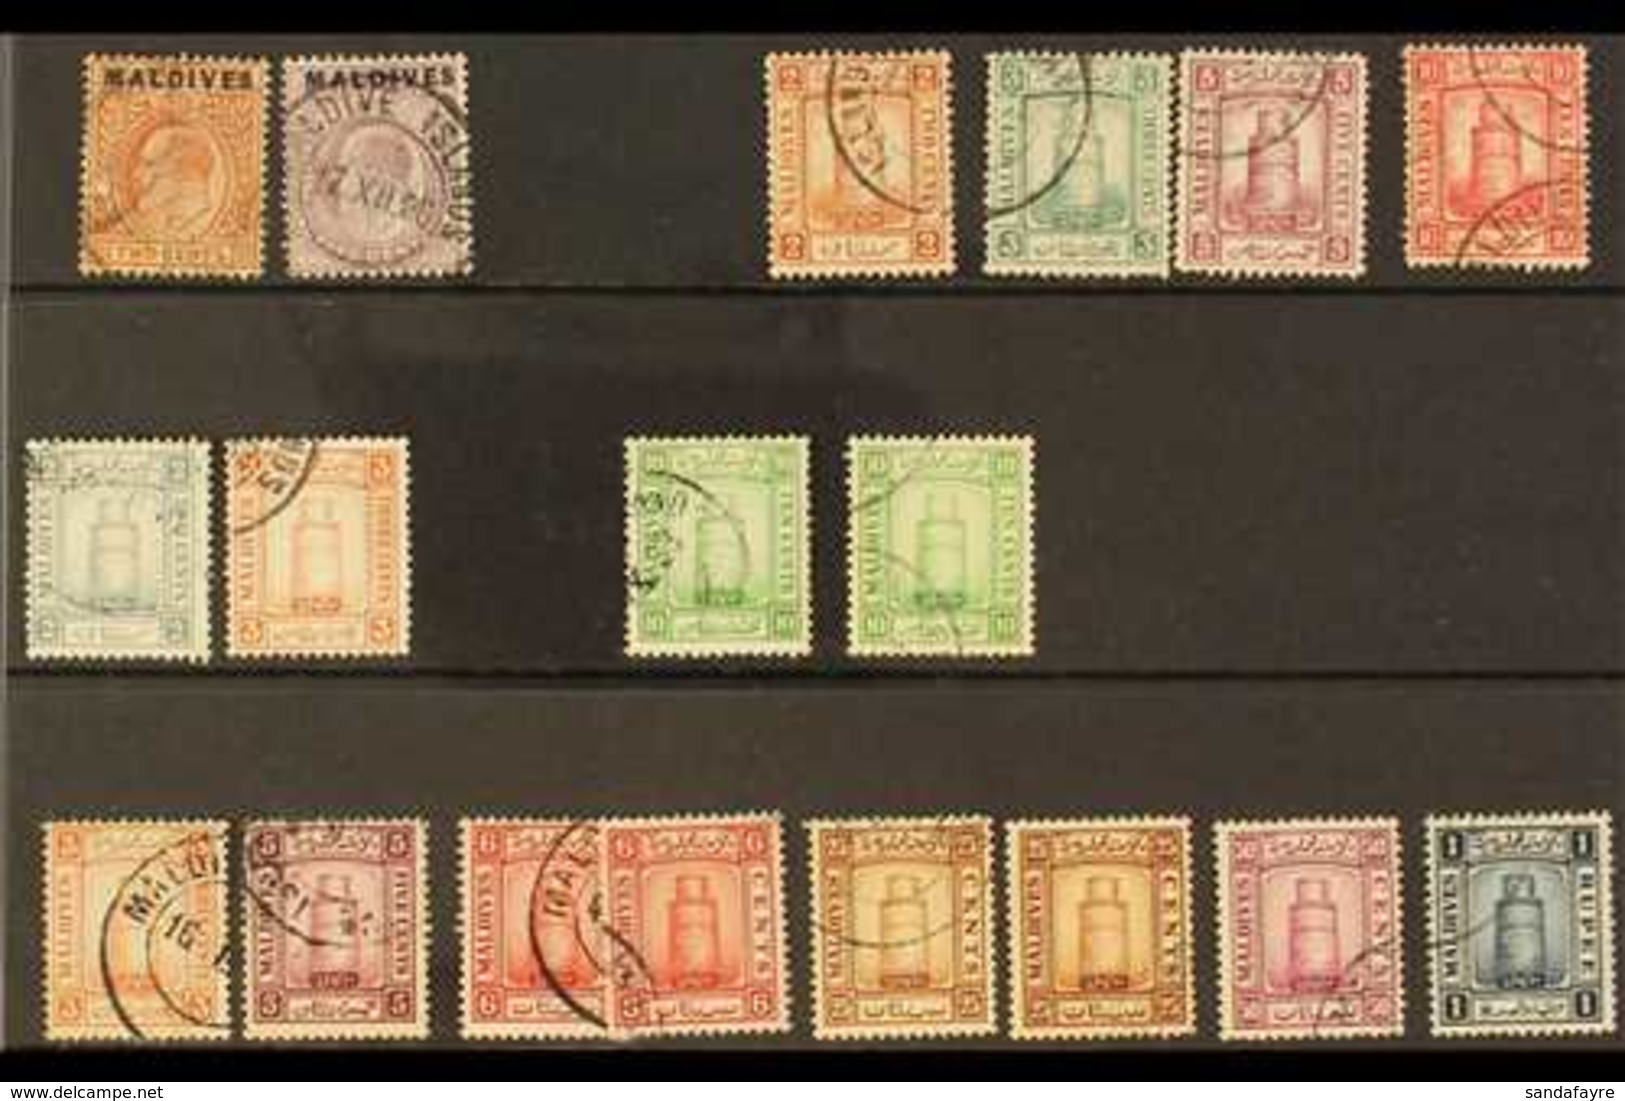 1906-33 USED GROUP Incl. 1906 2c & 5c, 1909 Set, 1933 Wmk Upright 2c, 3c & 10c, Wmk Sideways 3c To 6c, 25c To 1r, Odd Fa - Maldives (...-1965)